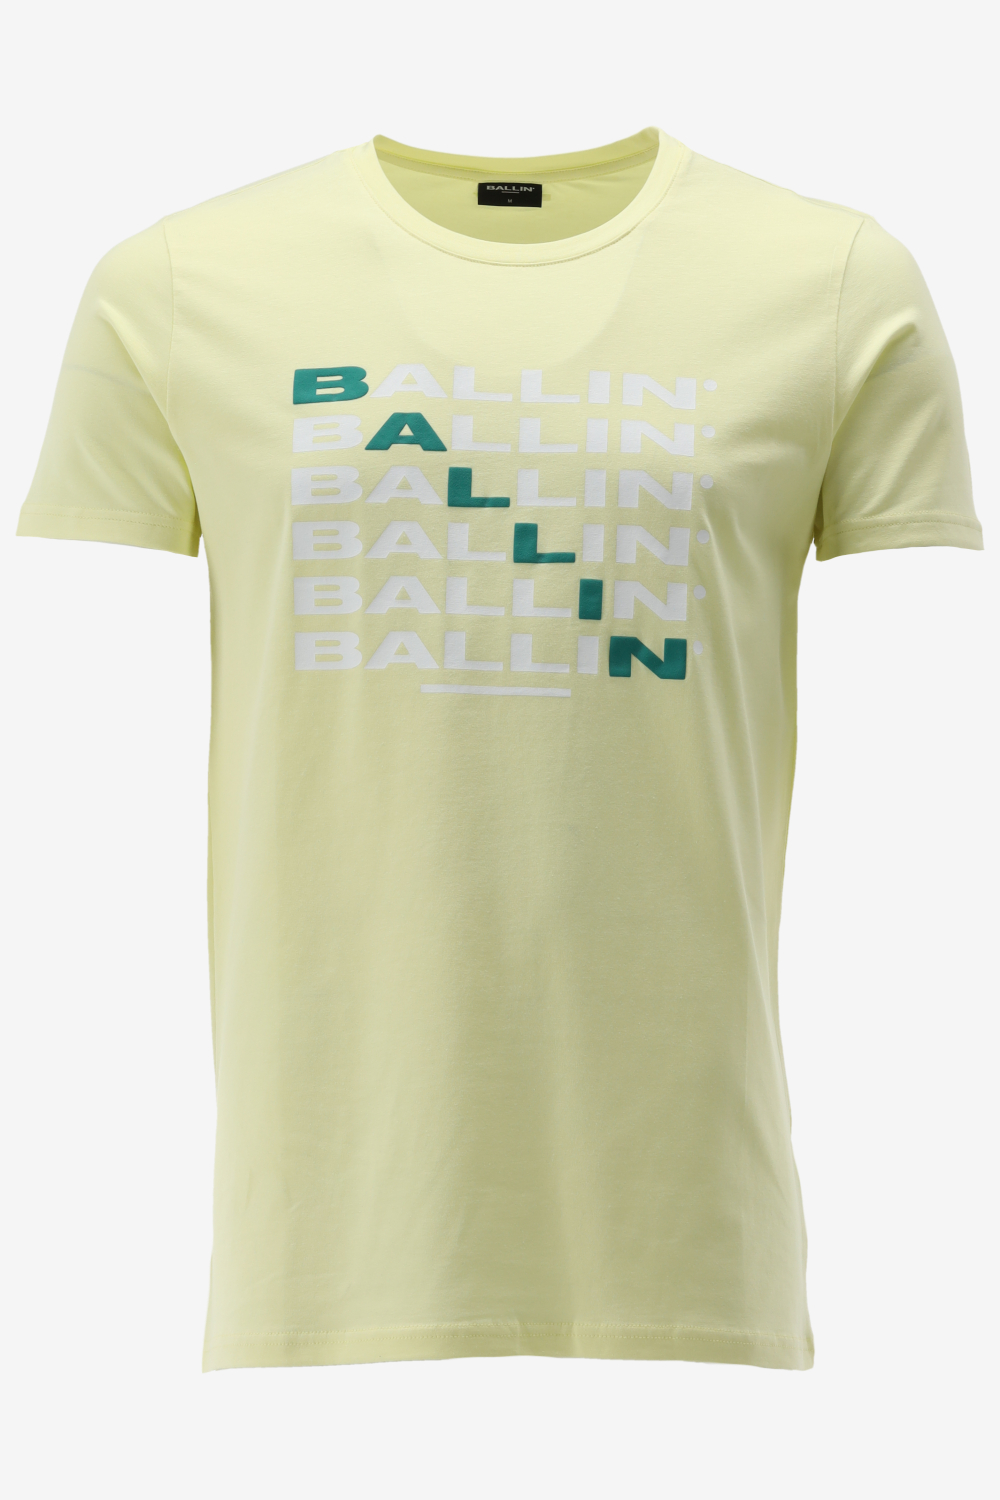 Ballin T shirt